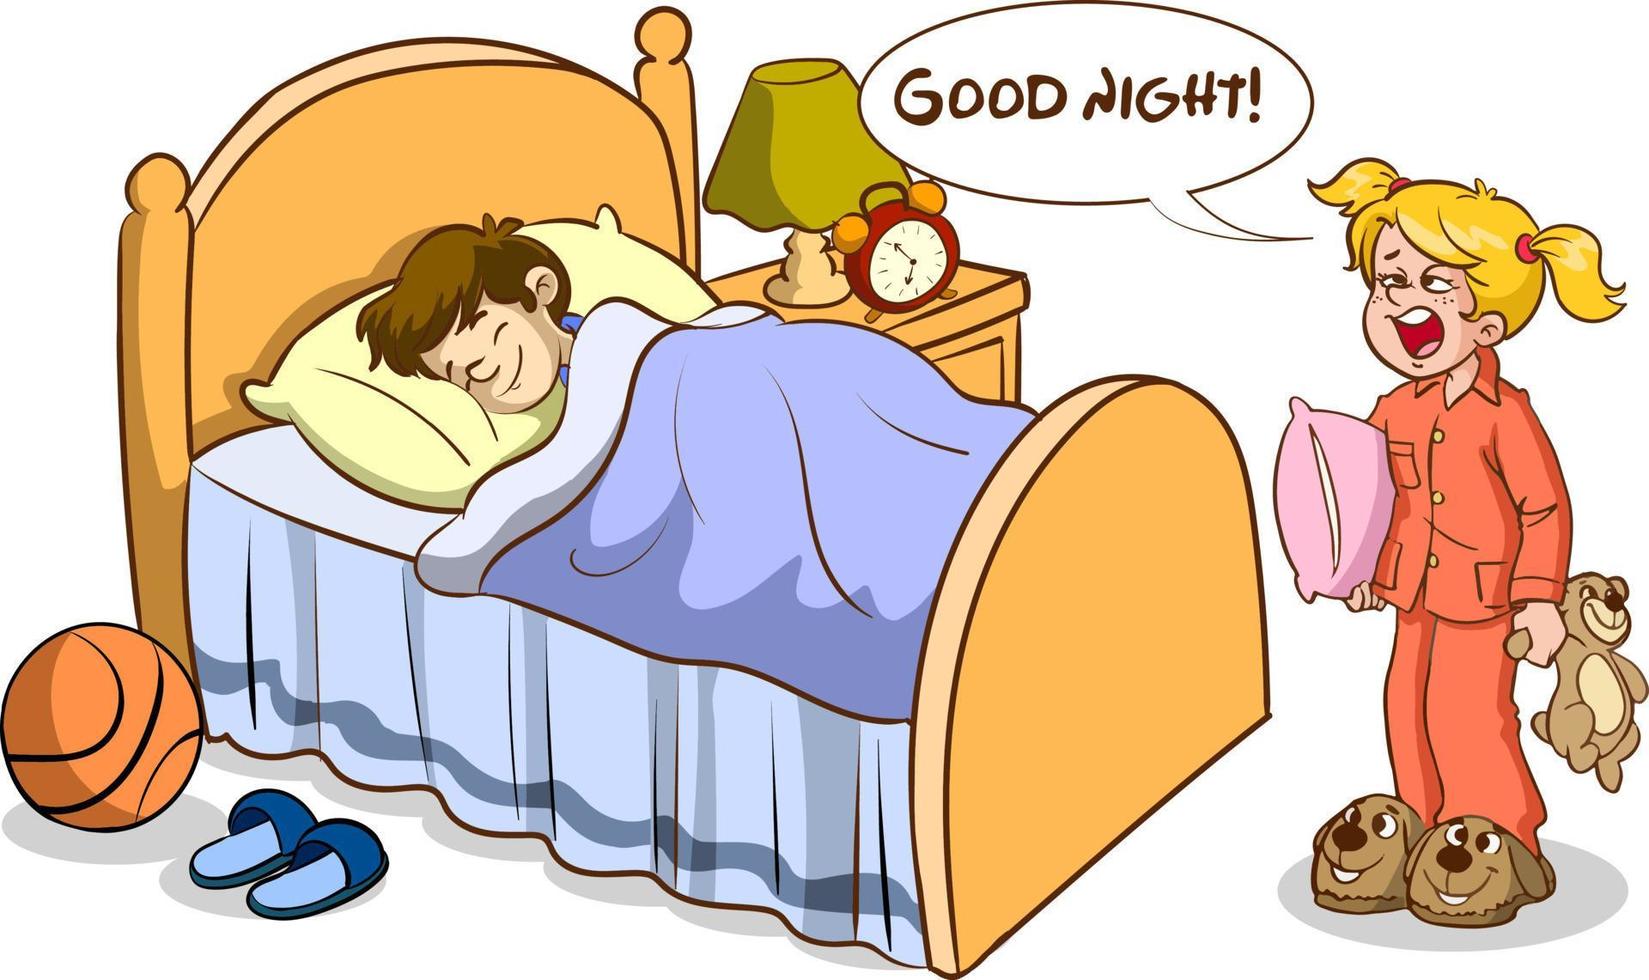 sleepy yawning kids and parents good night cartoon vector 21081245 ...